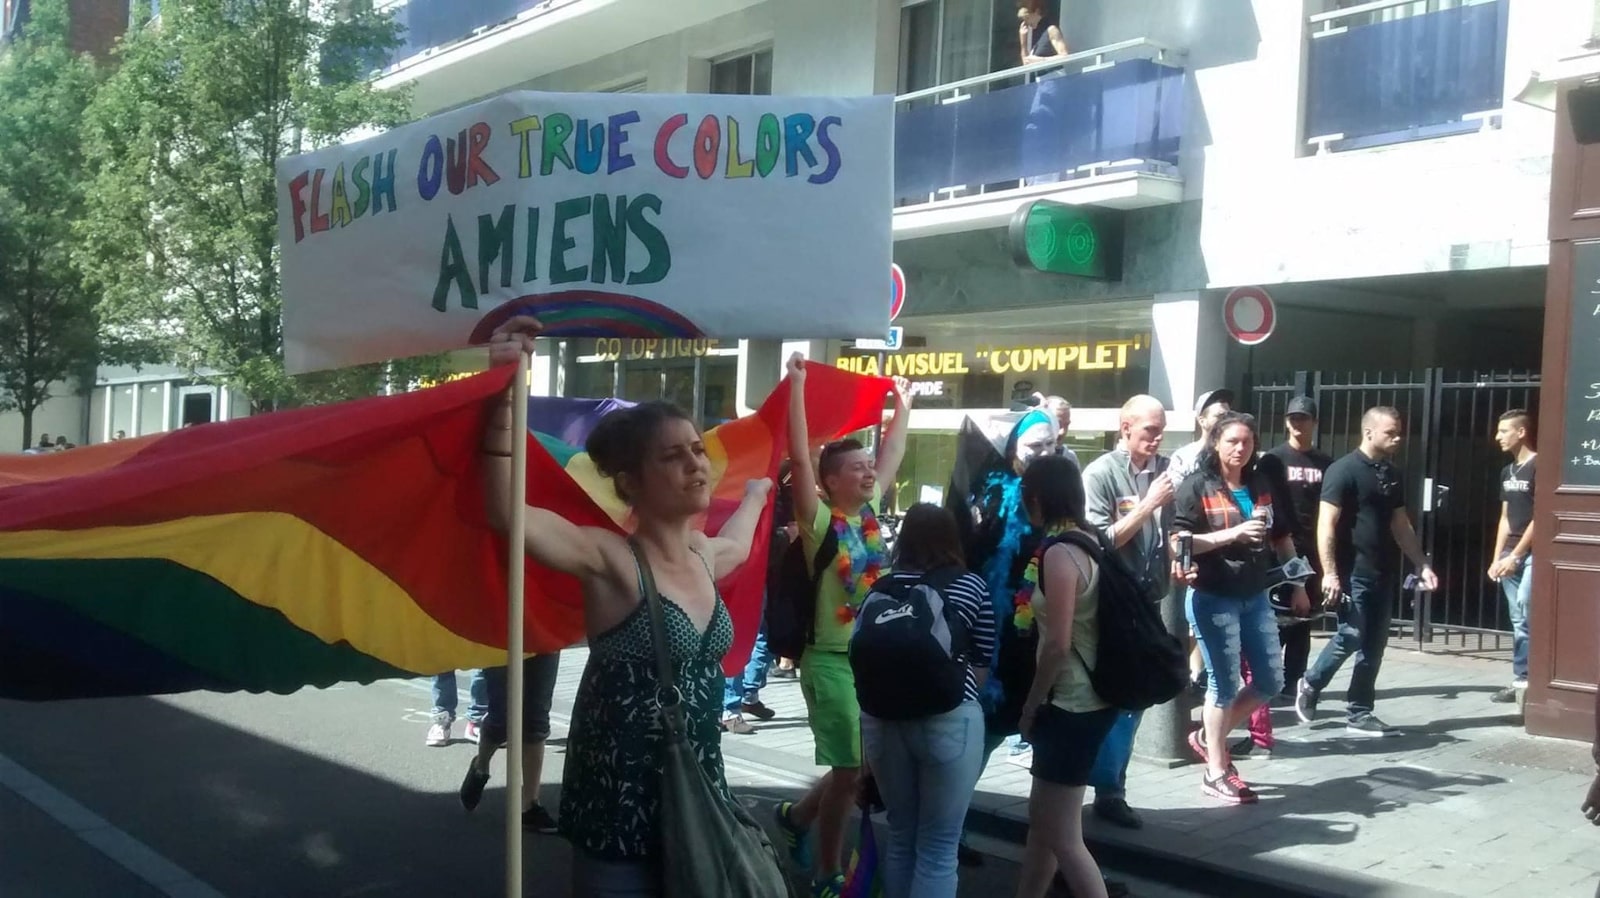 Flash Our True Colors activist at Paris Pride march in 2015